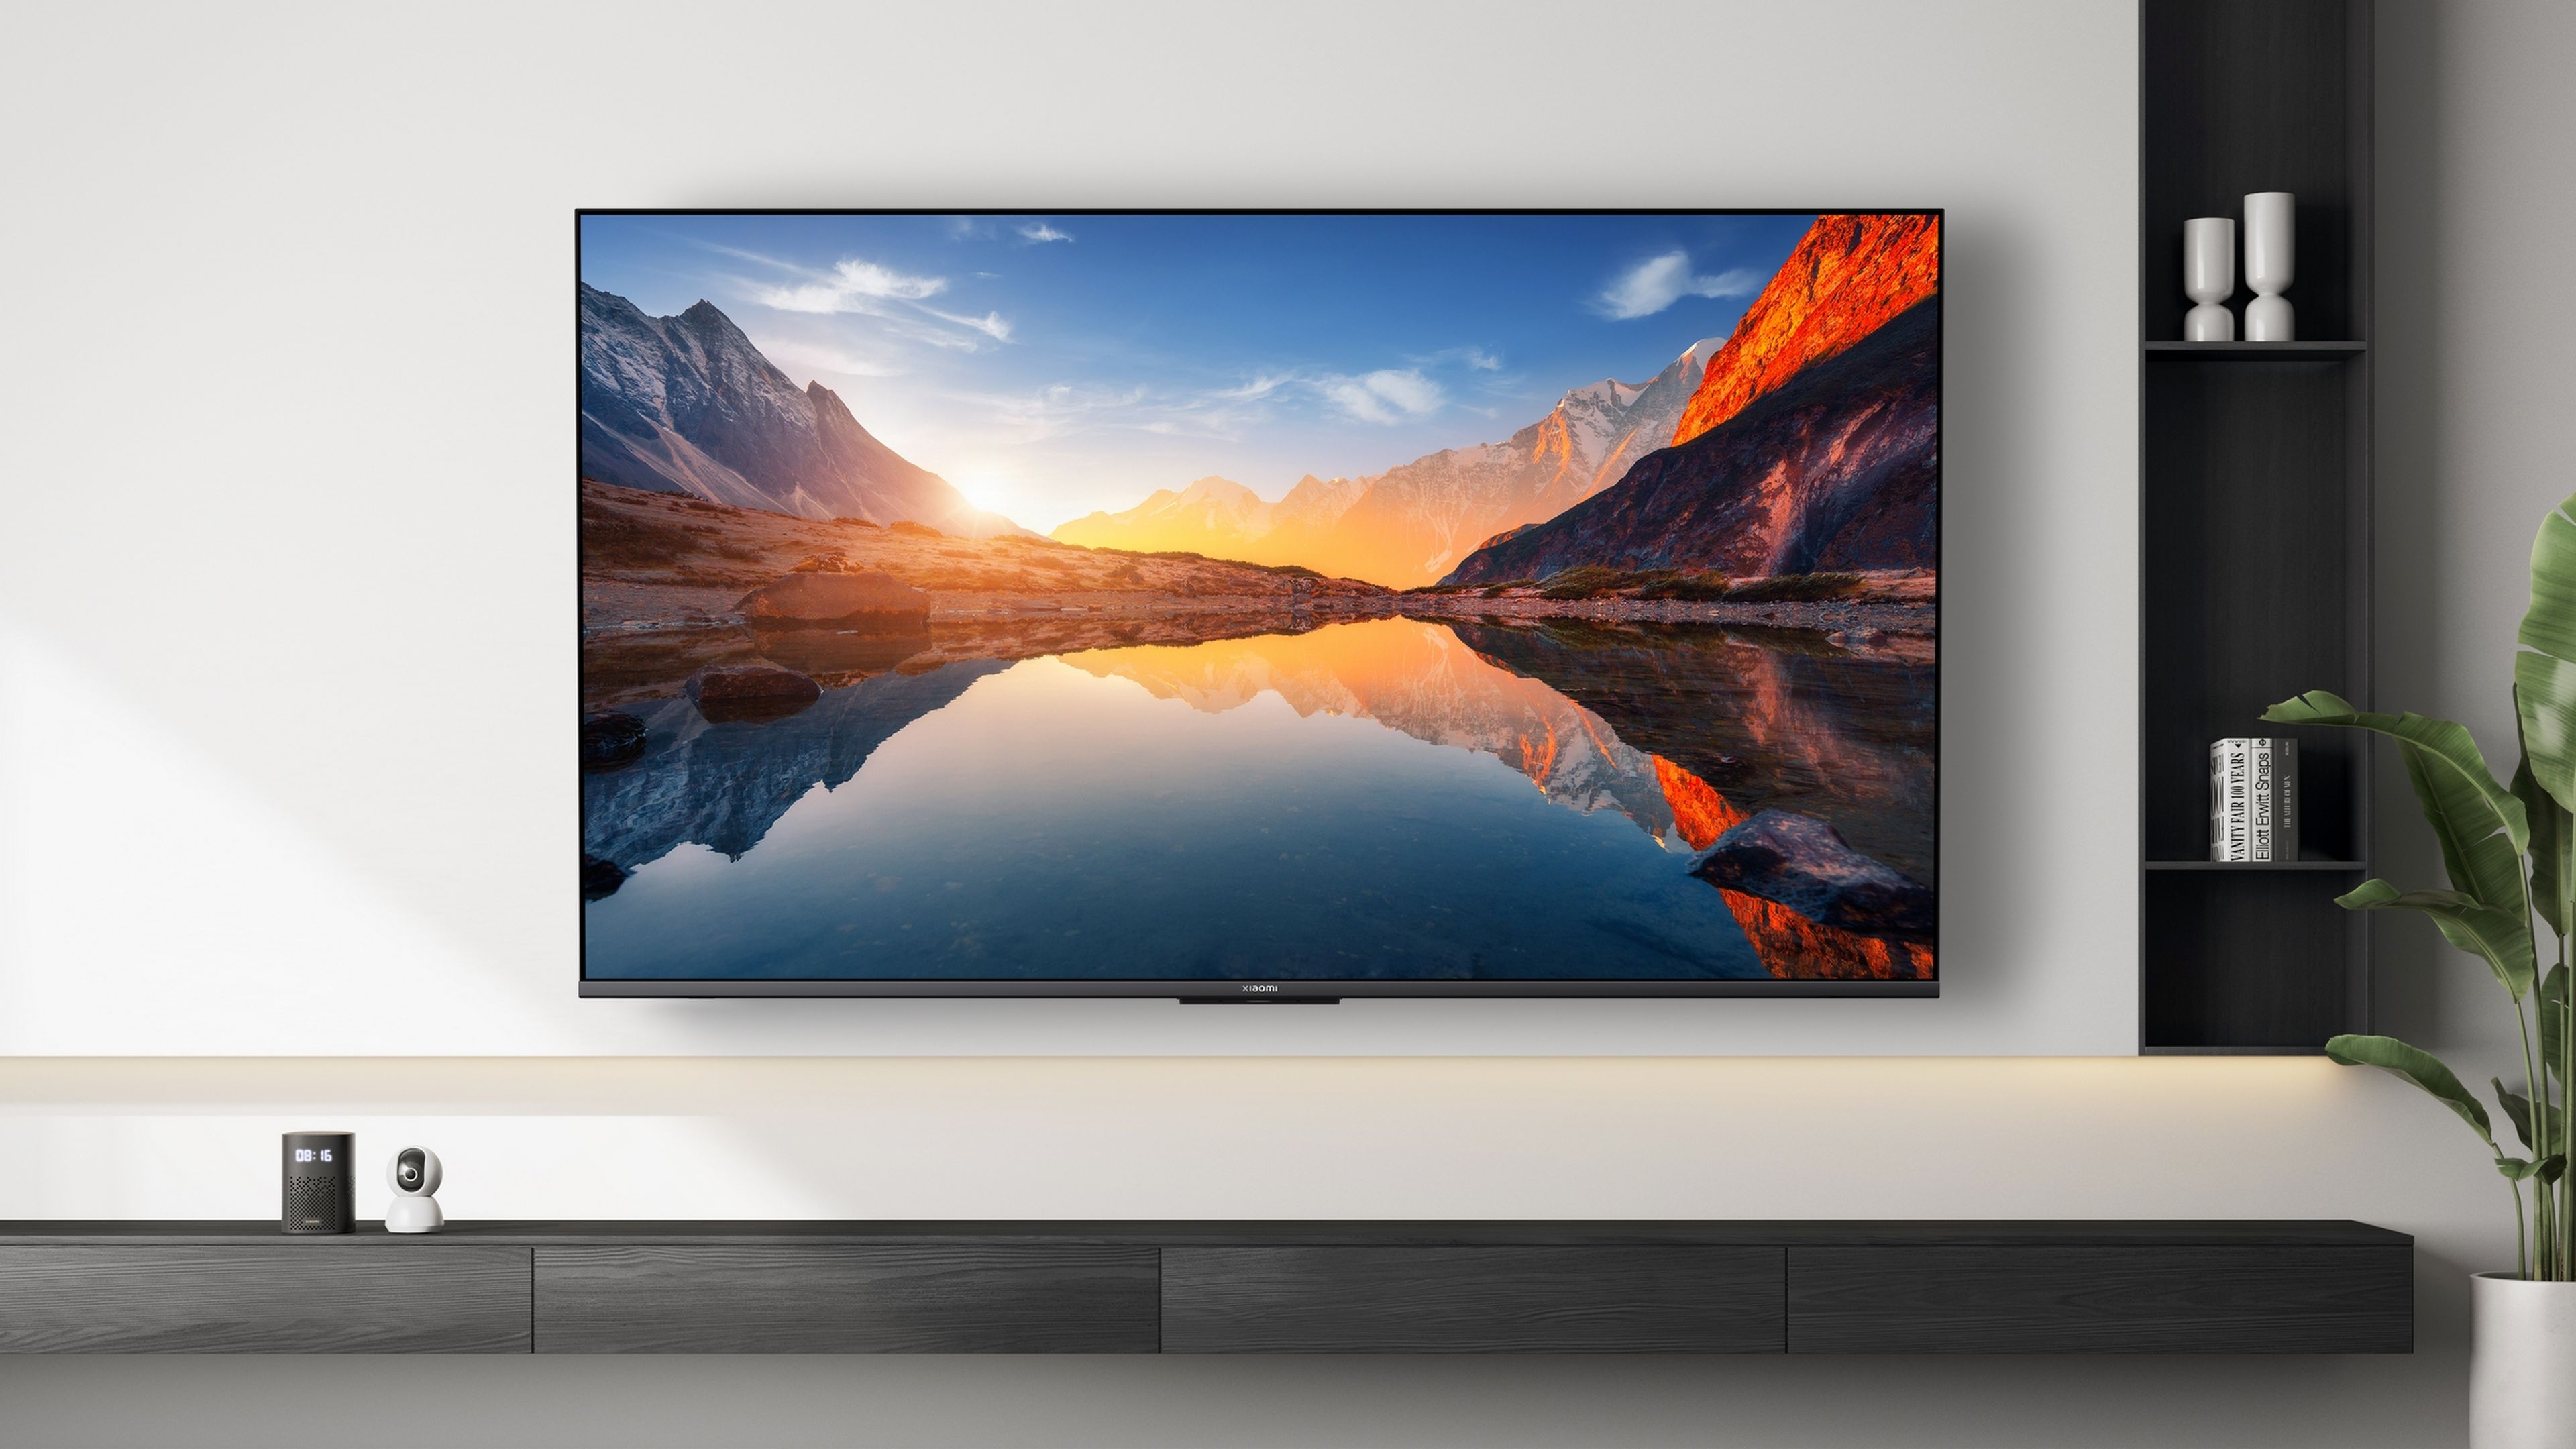 Xiaomi TV A 2025